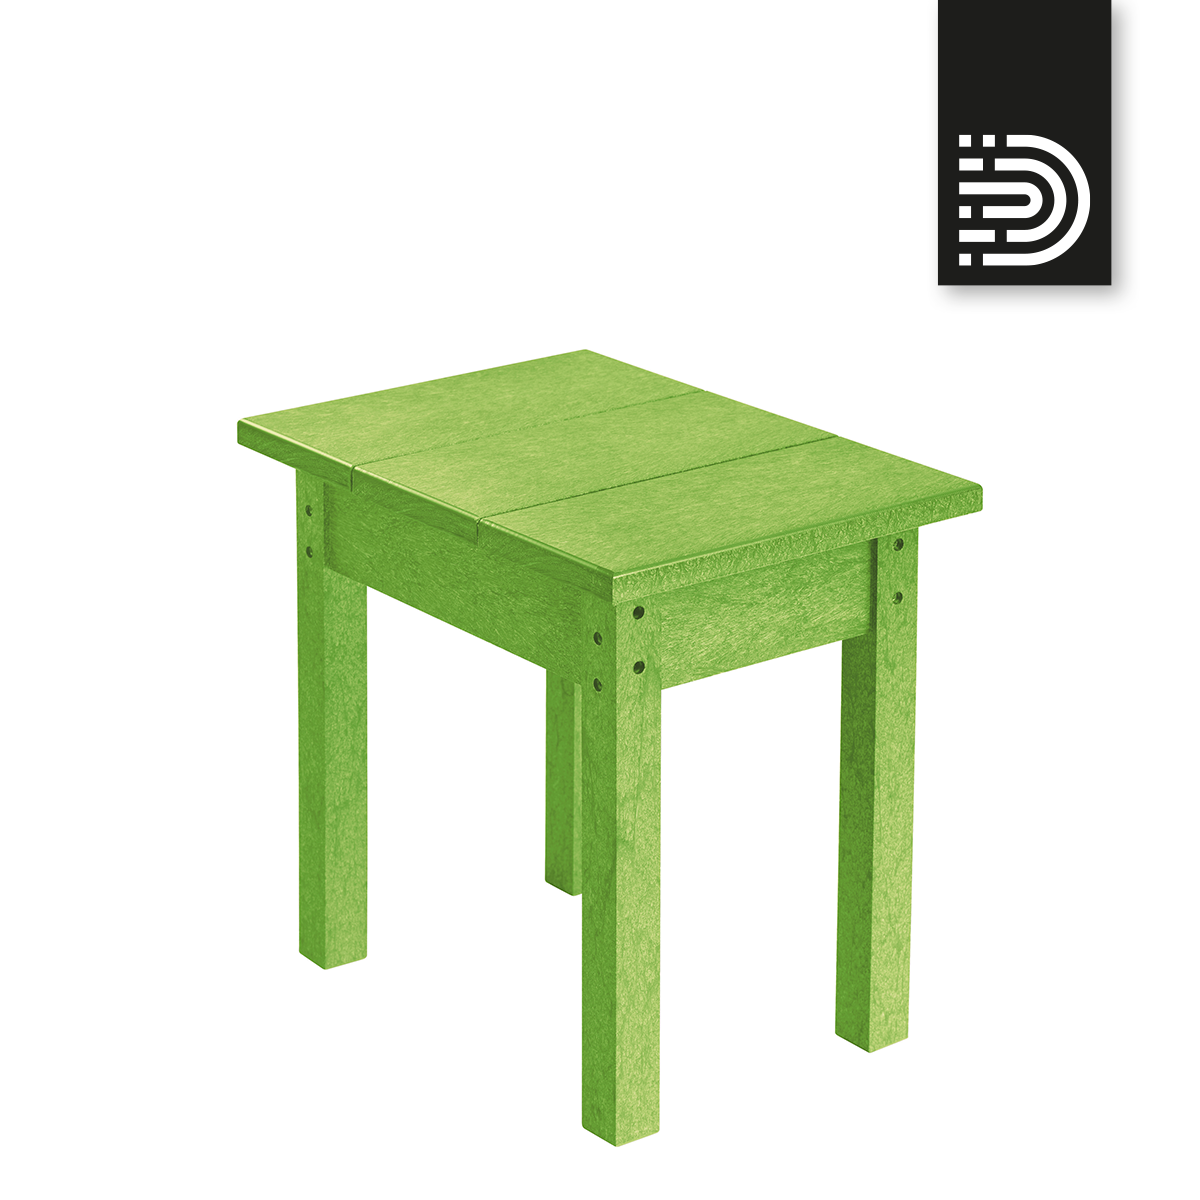 T01 small rectangular table - Kiwi green 17